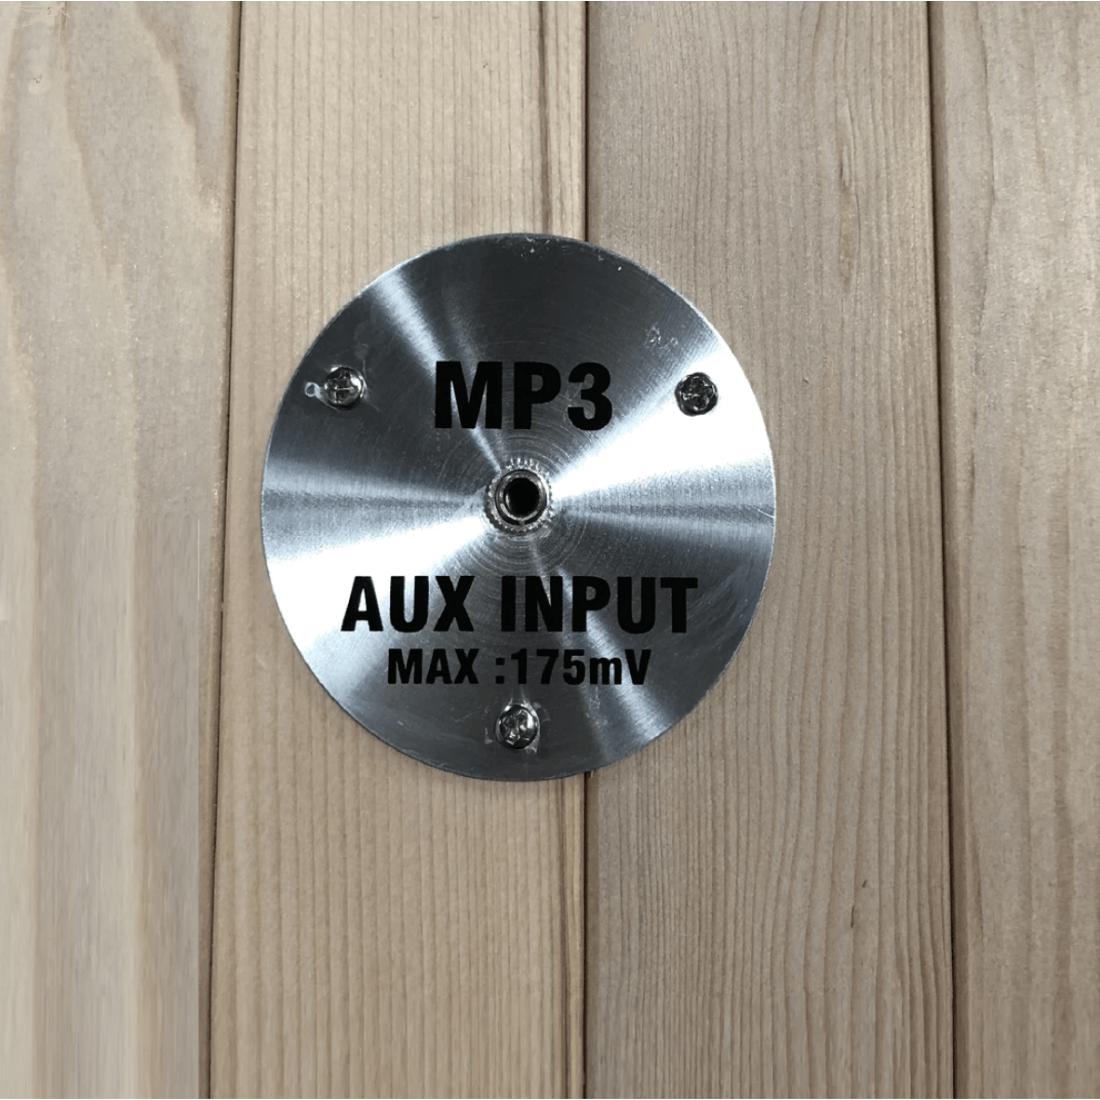 Maxxus "Seattle Edition" 2 Per Low EMF FAR Infrared Carbon Canadian Hemlock Sauna, MX-J206-01 audio input